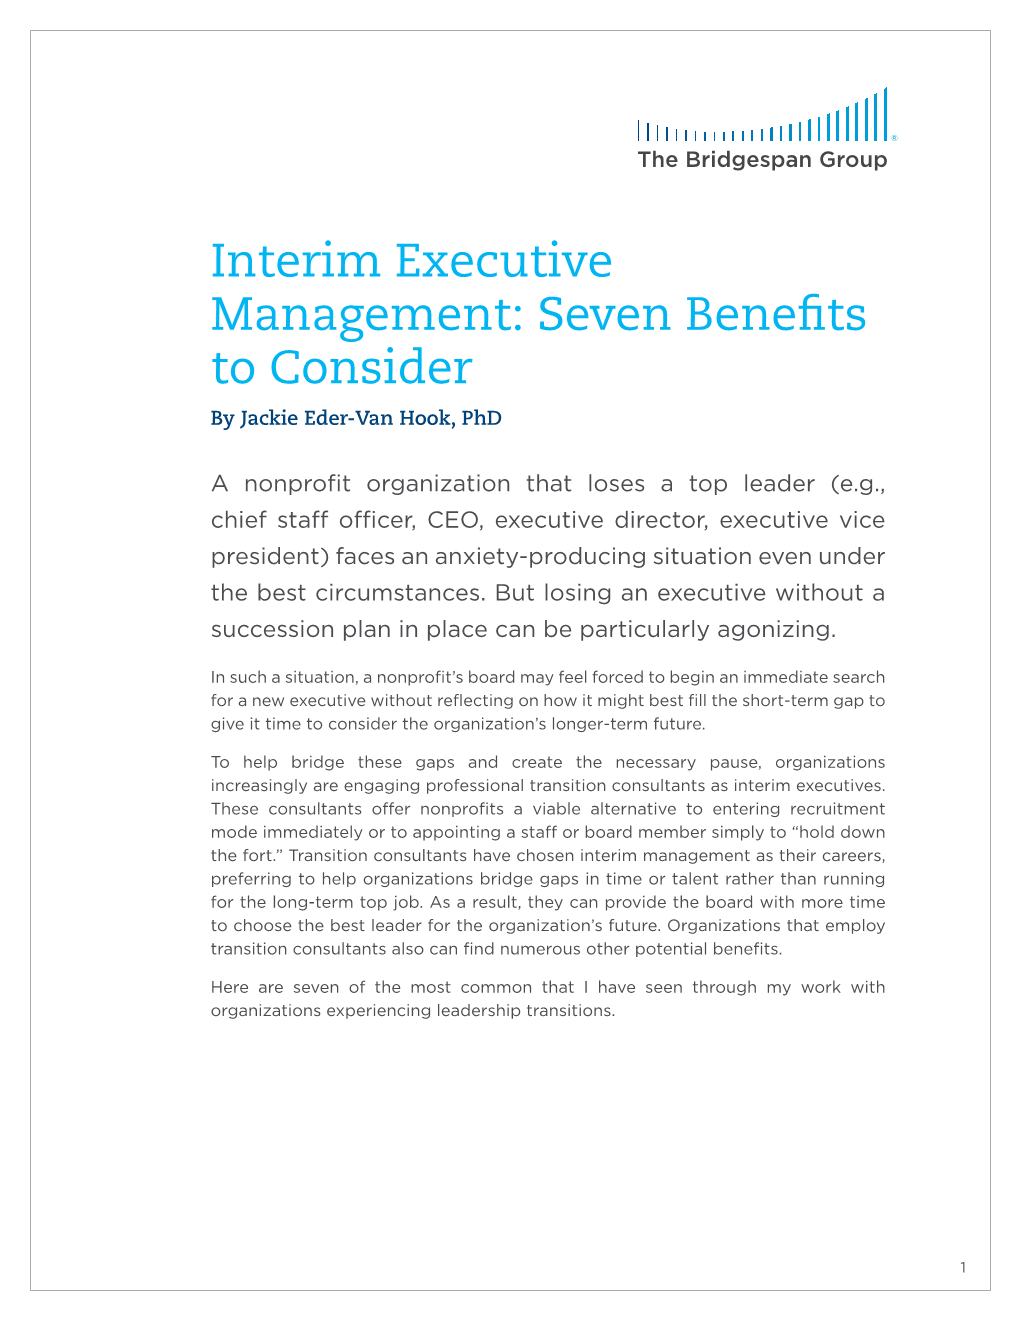 Interim Executive Management: Seven Benefits to Consider by Jackie Eder-Van Hook, Phd